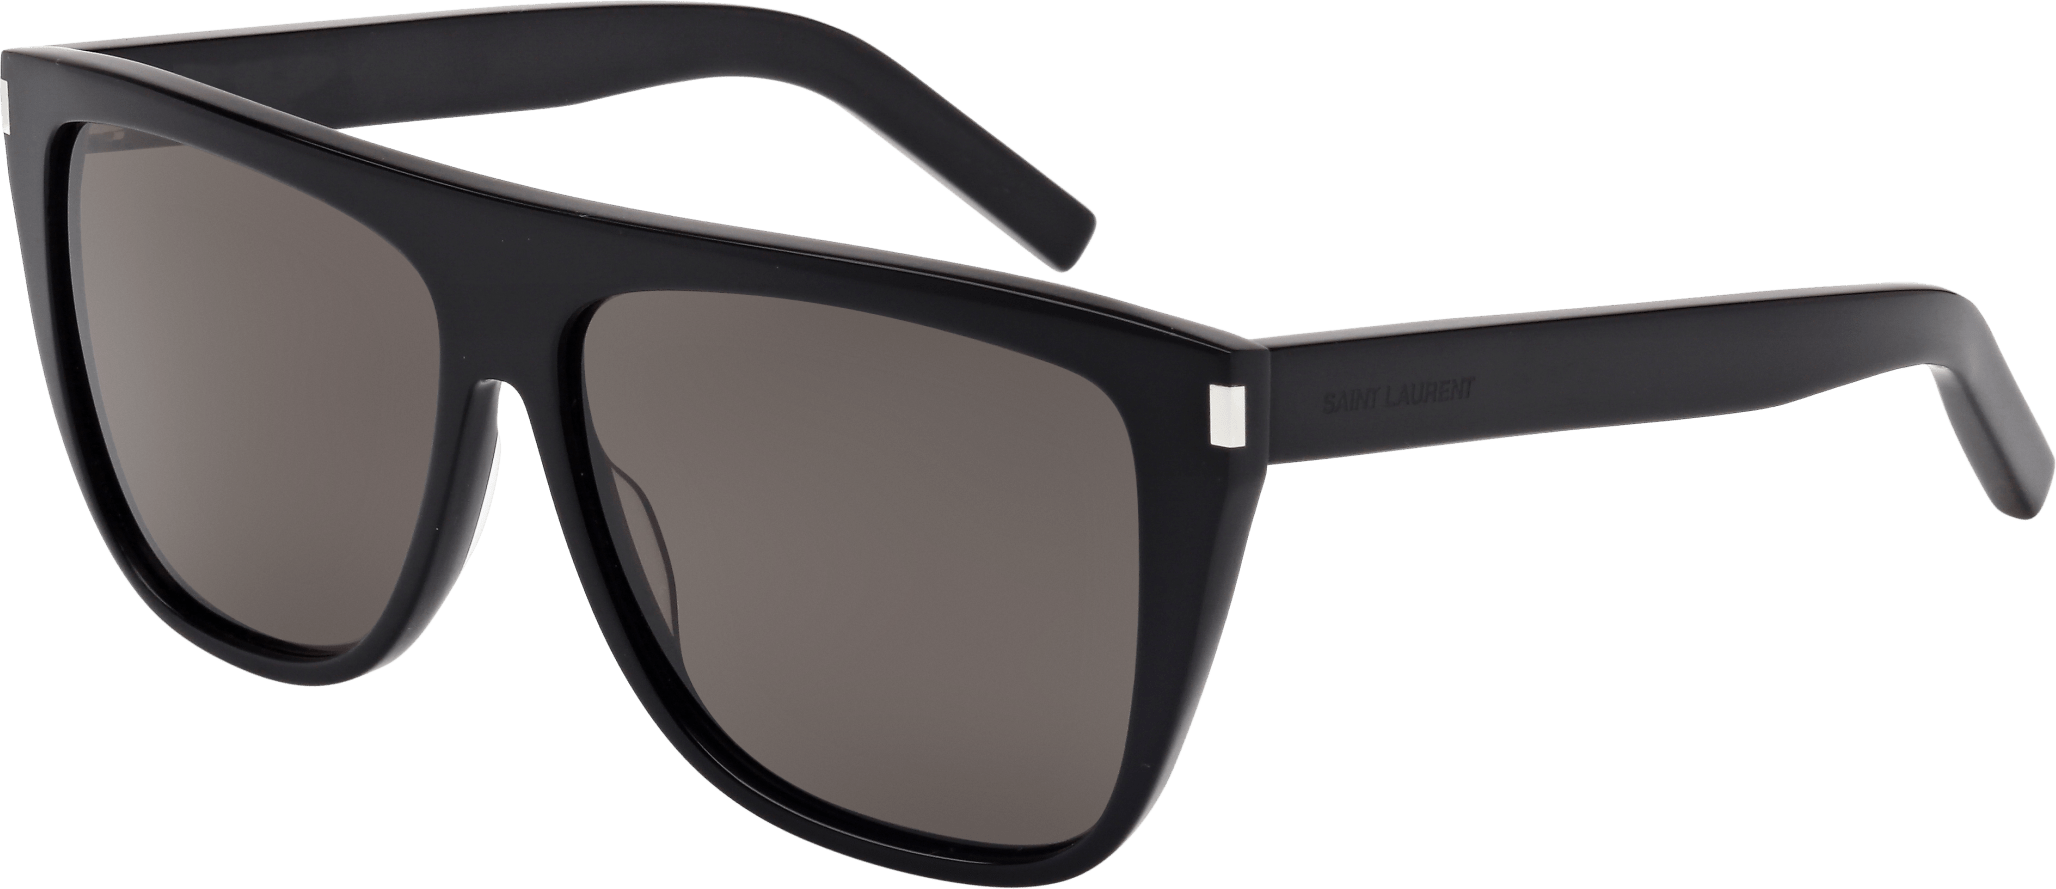 Saint Laurent Men's SL 1 Flattop Sunglasses